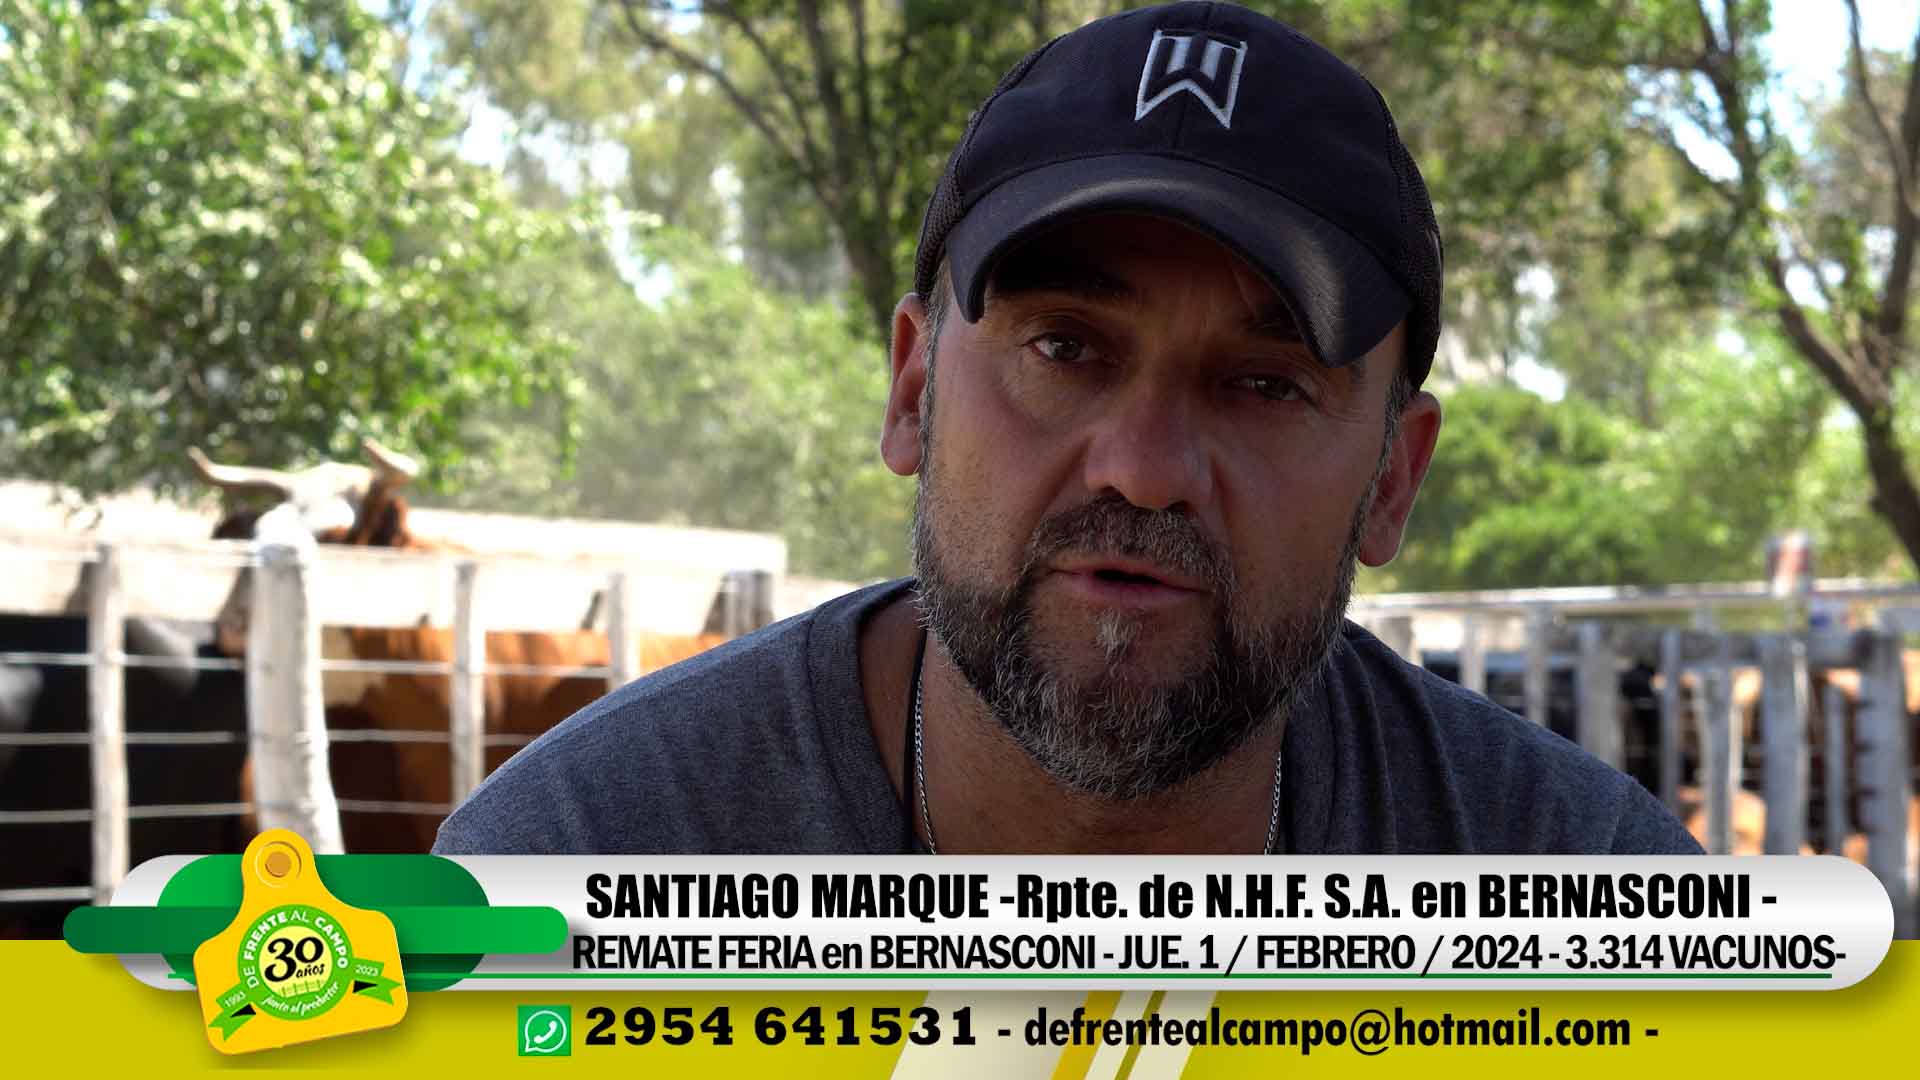 Entrevista: Santiago Marque – Rpte. de NHF S.A. en Bernasconi -L.P.-